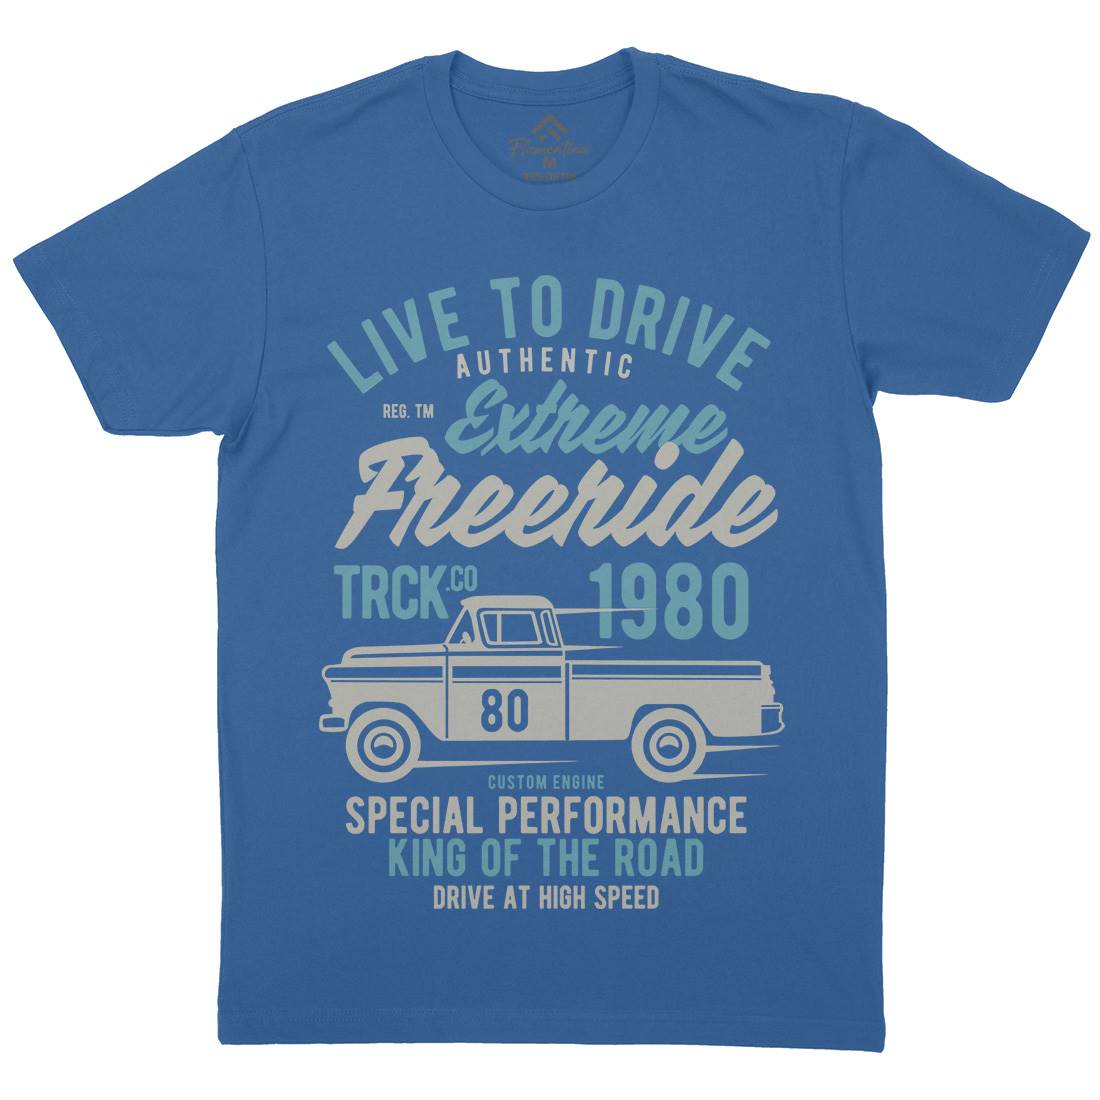 Extreme Freeride Truck Mens Organic Crew Neck T-Shirt Cars B401